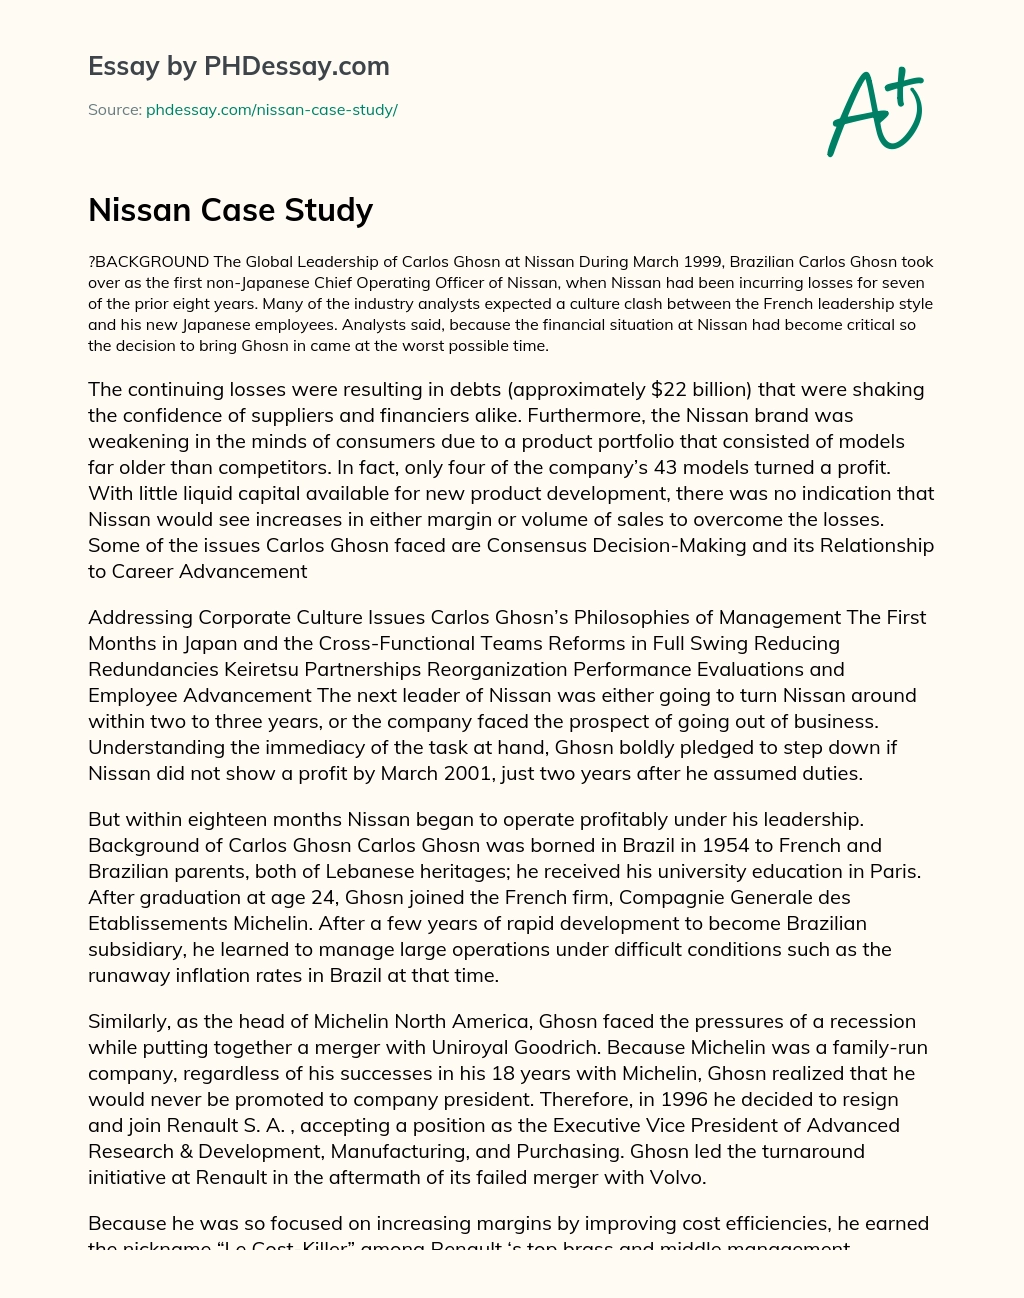 Nissan Case Study essay